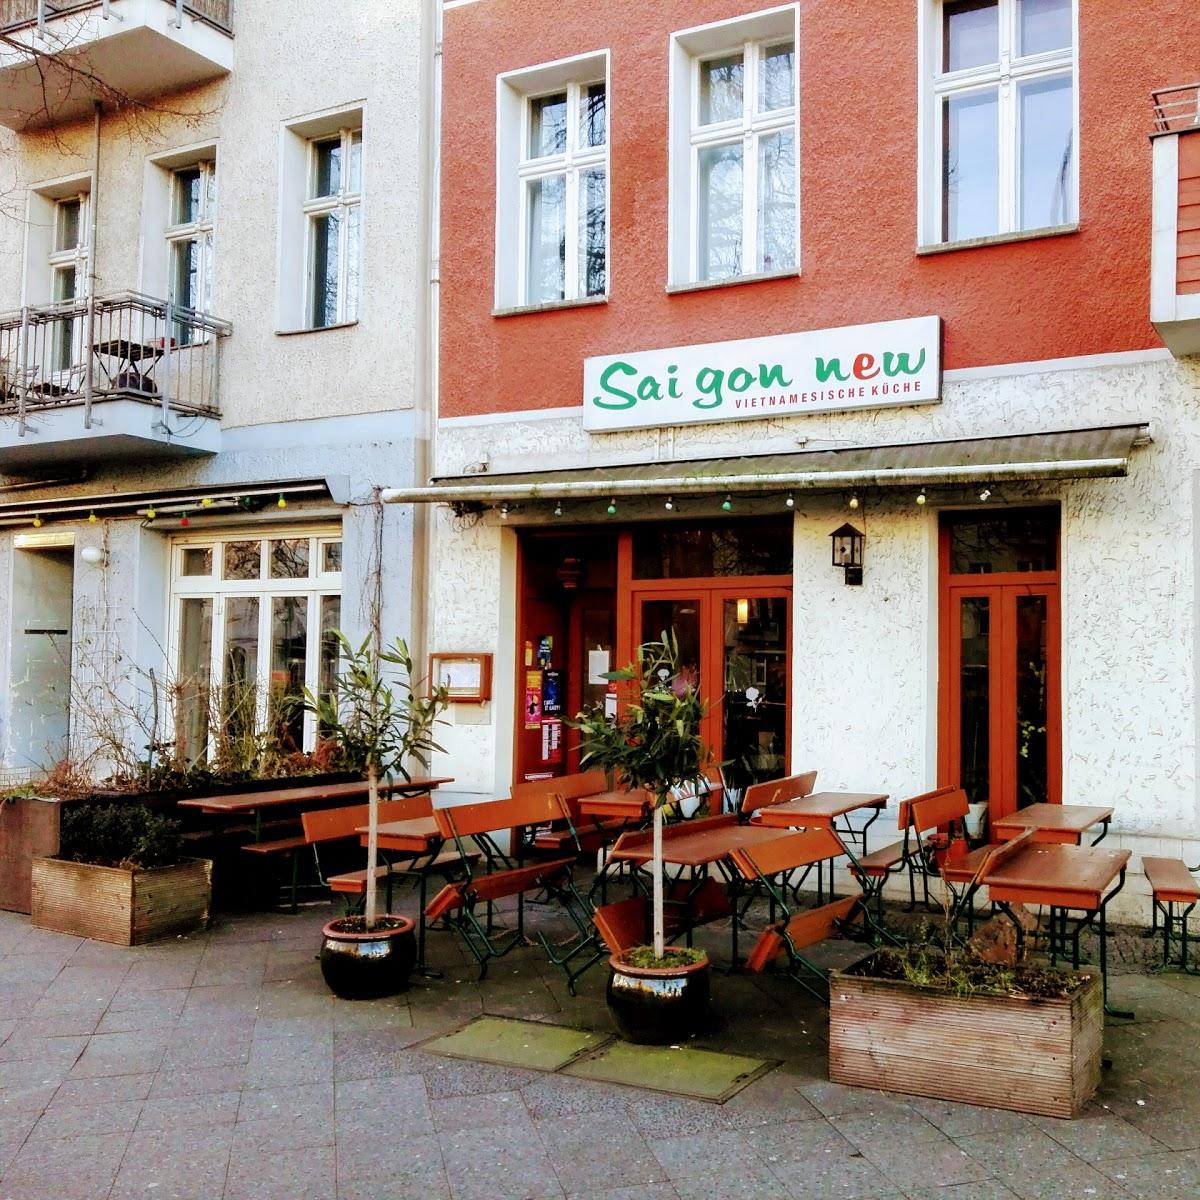 Restaurant "Sai gon new - vietnamesische Küche" in Berlin